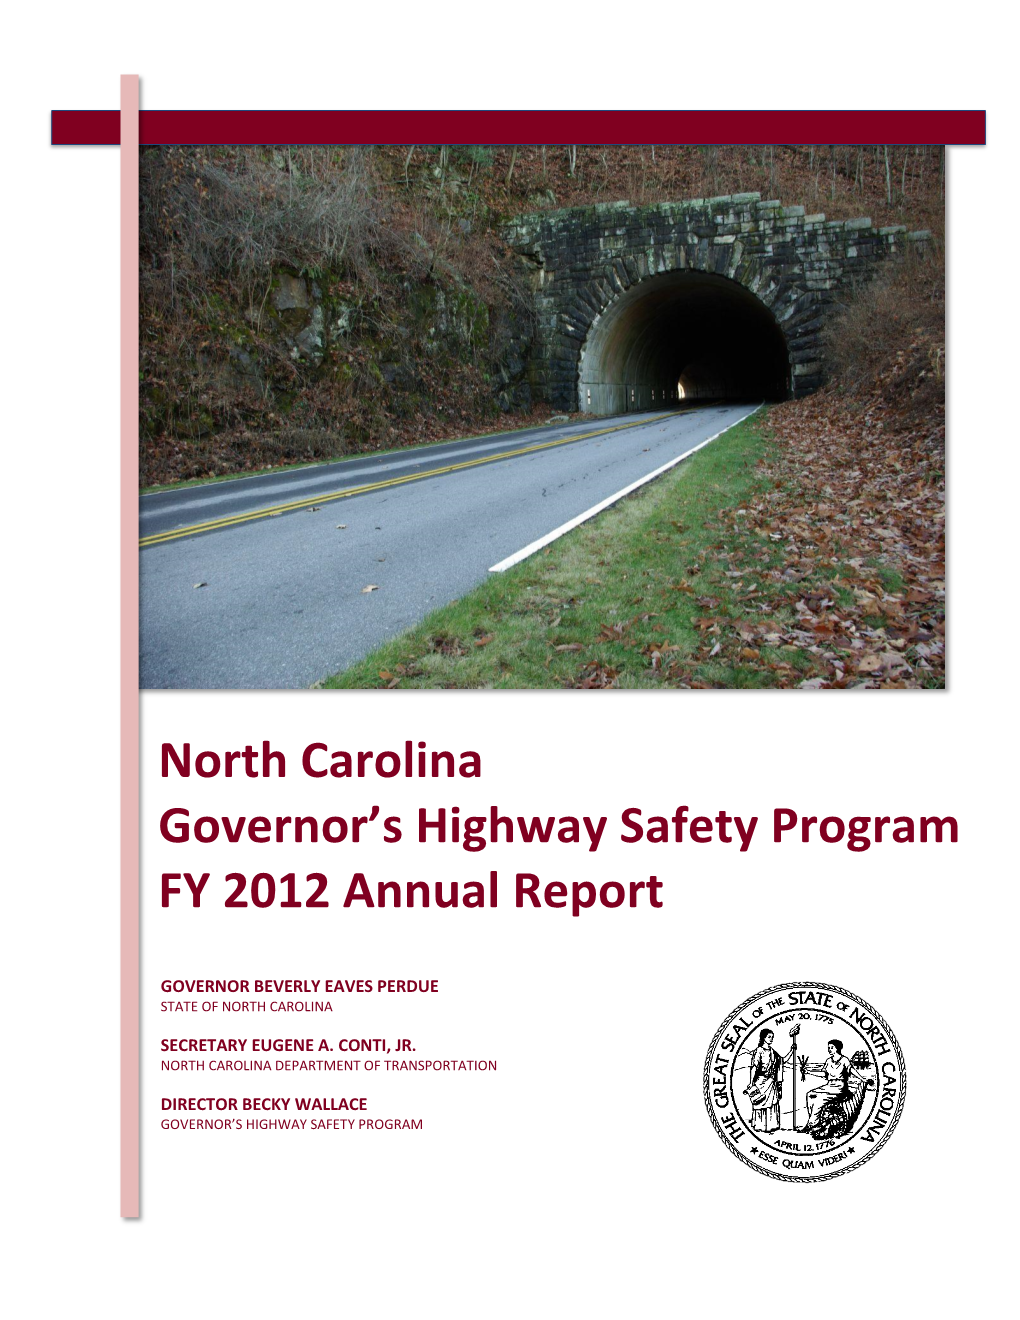 North Carolina Governor's Highway Safety Program FY